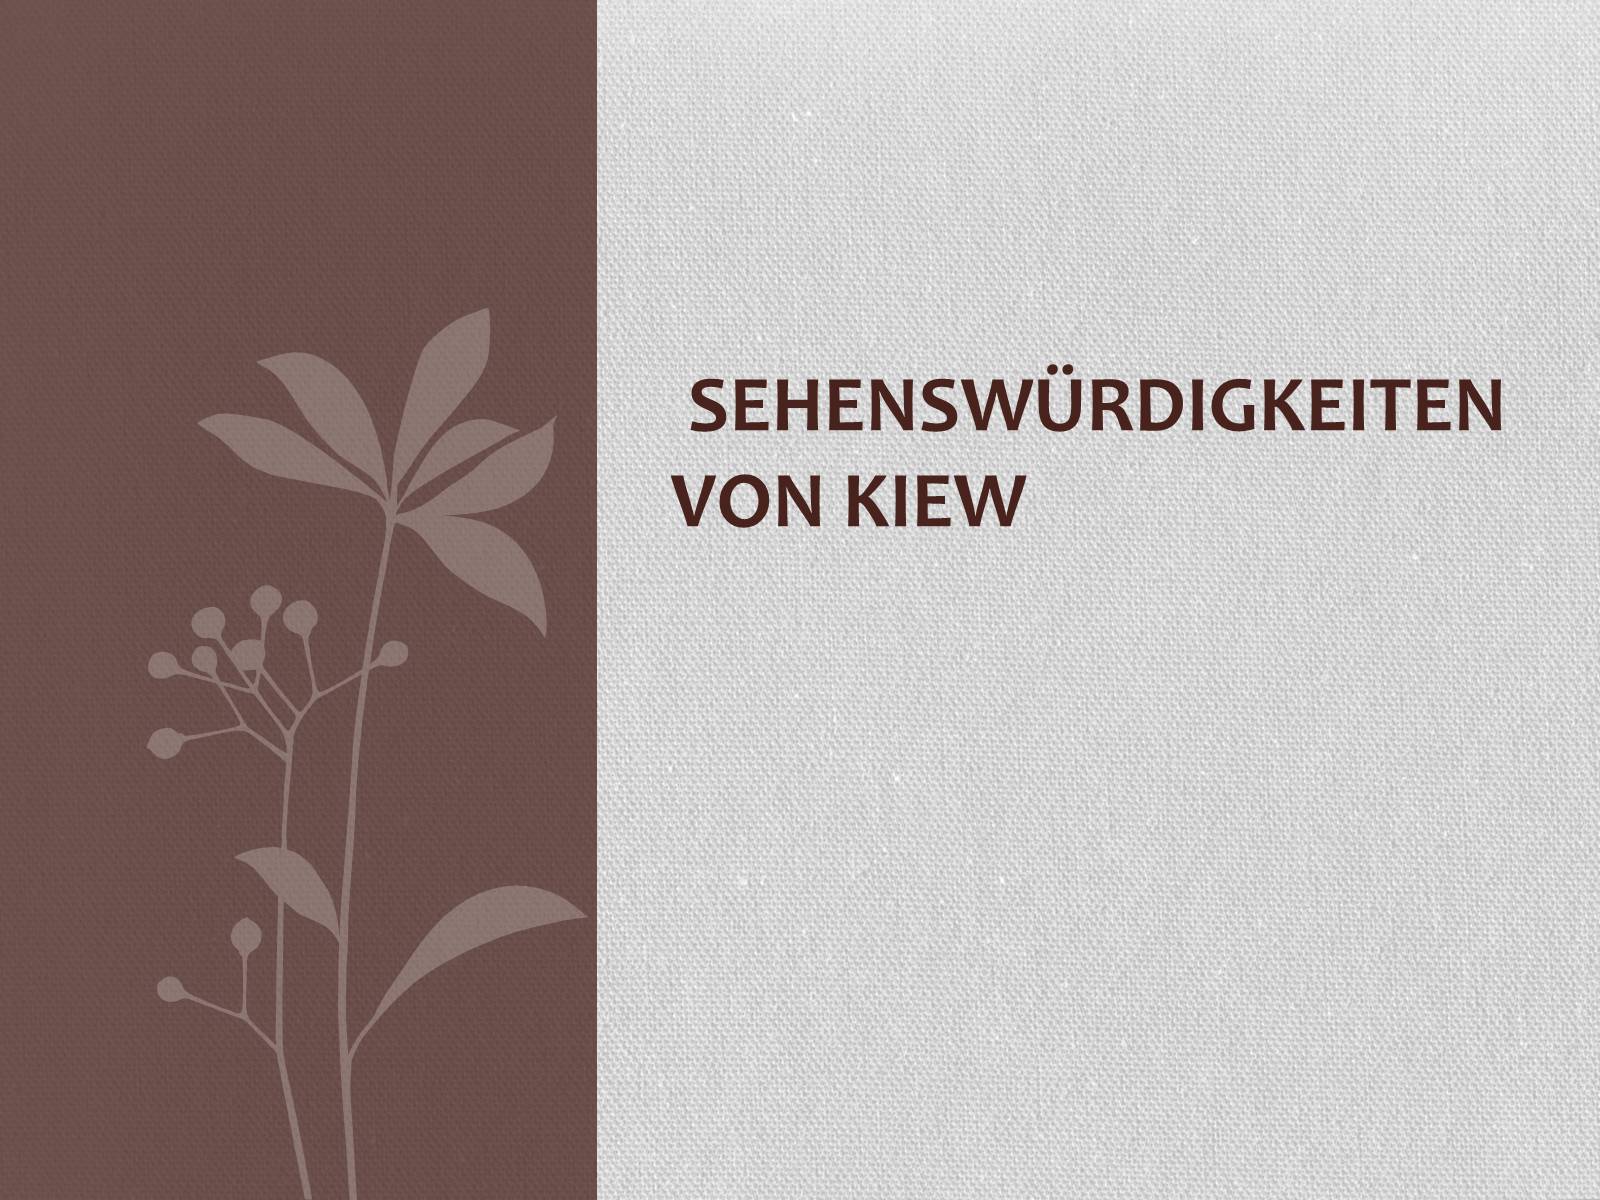 Презентація на тему «Sehenswurdigkeiten von Kiew» - Слайд #1